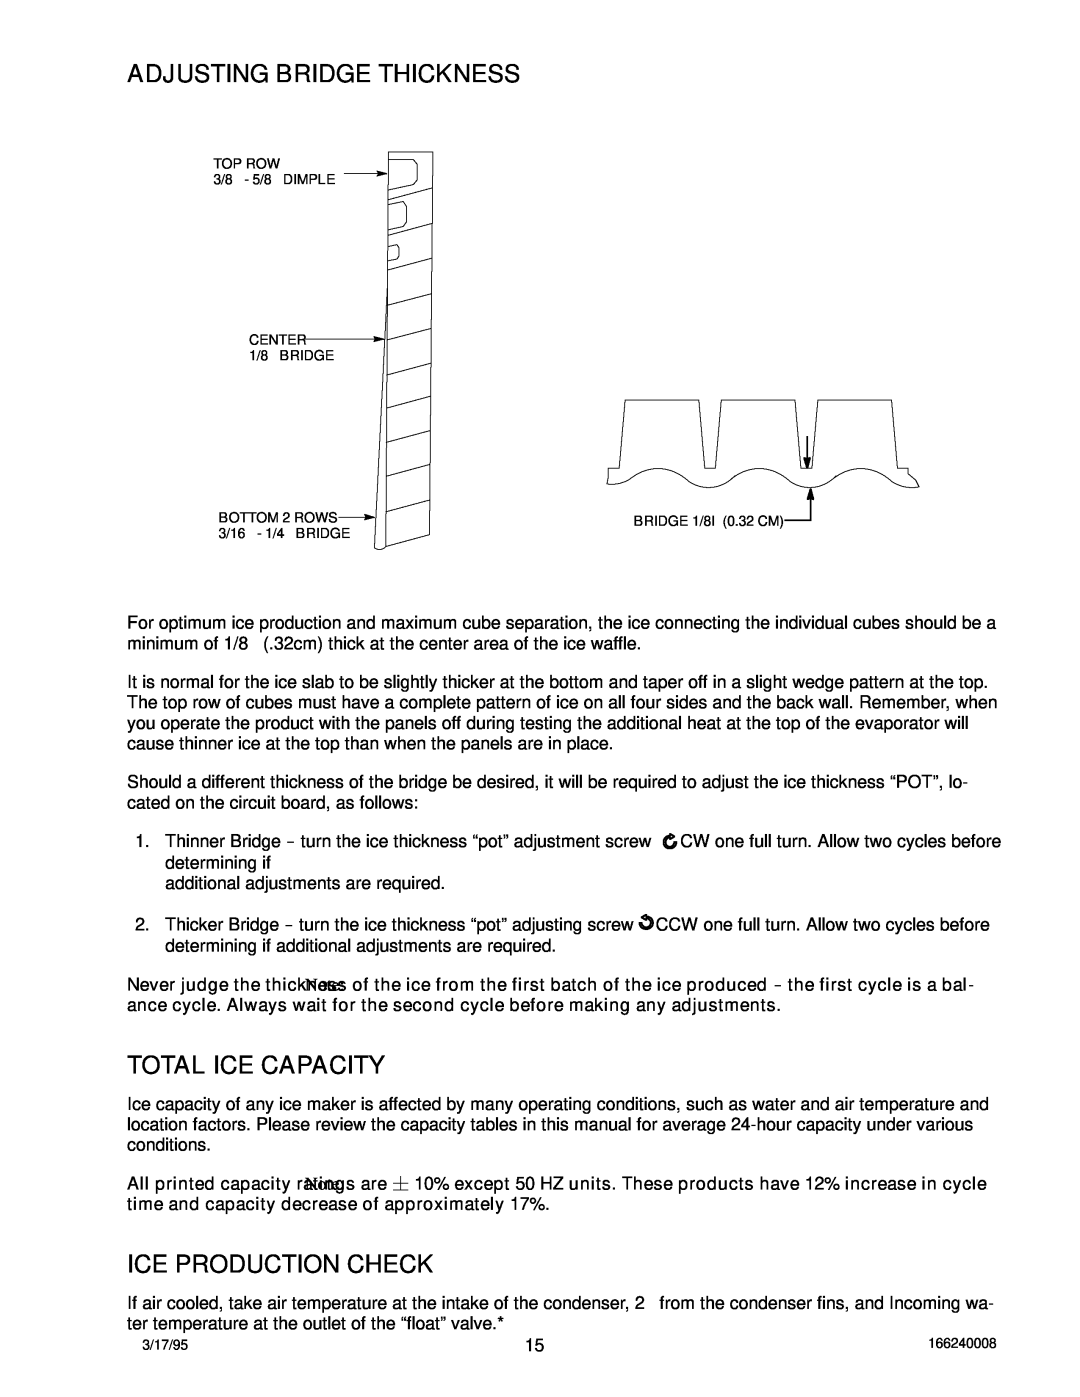 Cornelius 322 manual Adjusting Bridge Thickness, Total Ice Capacity, Ice Production Check 